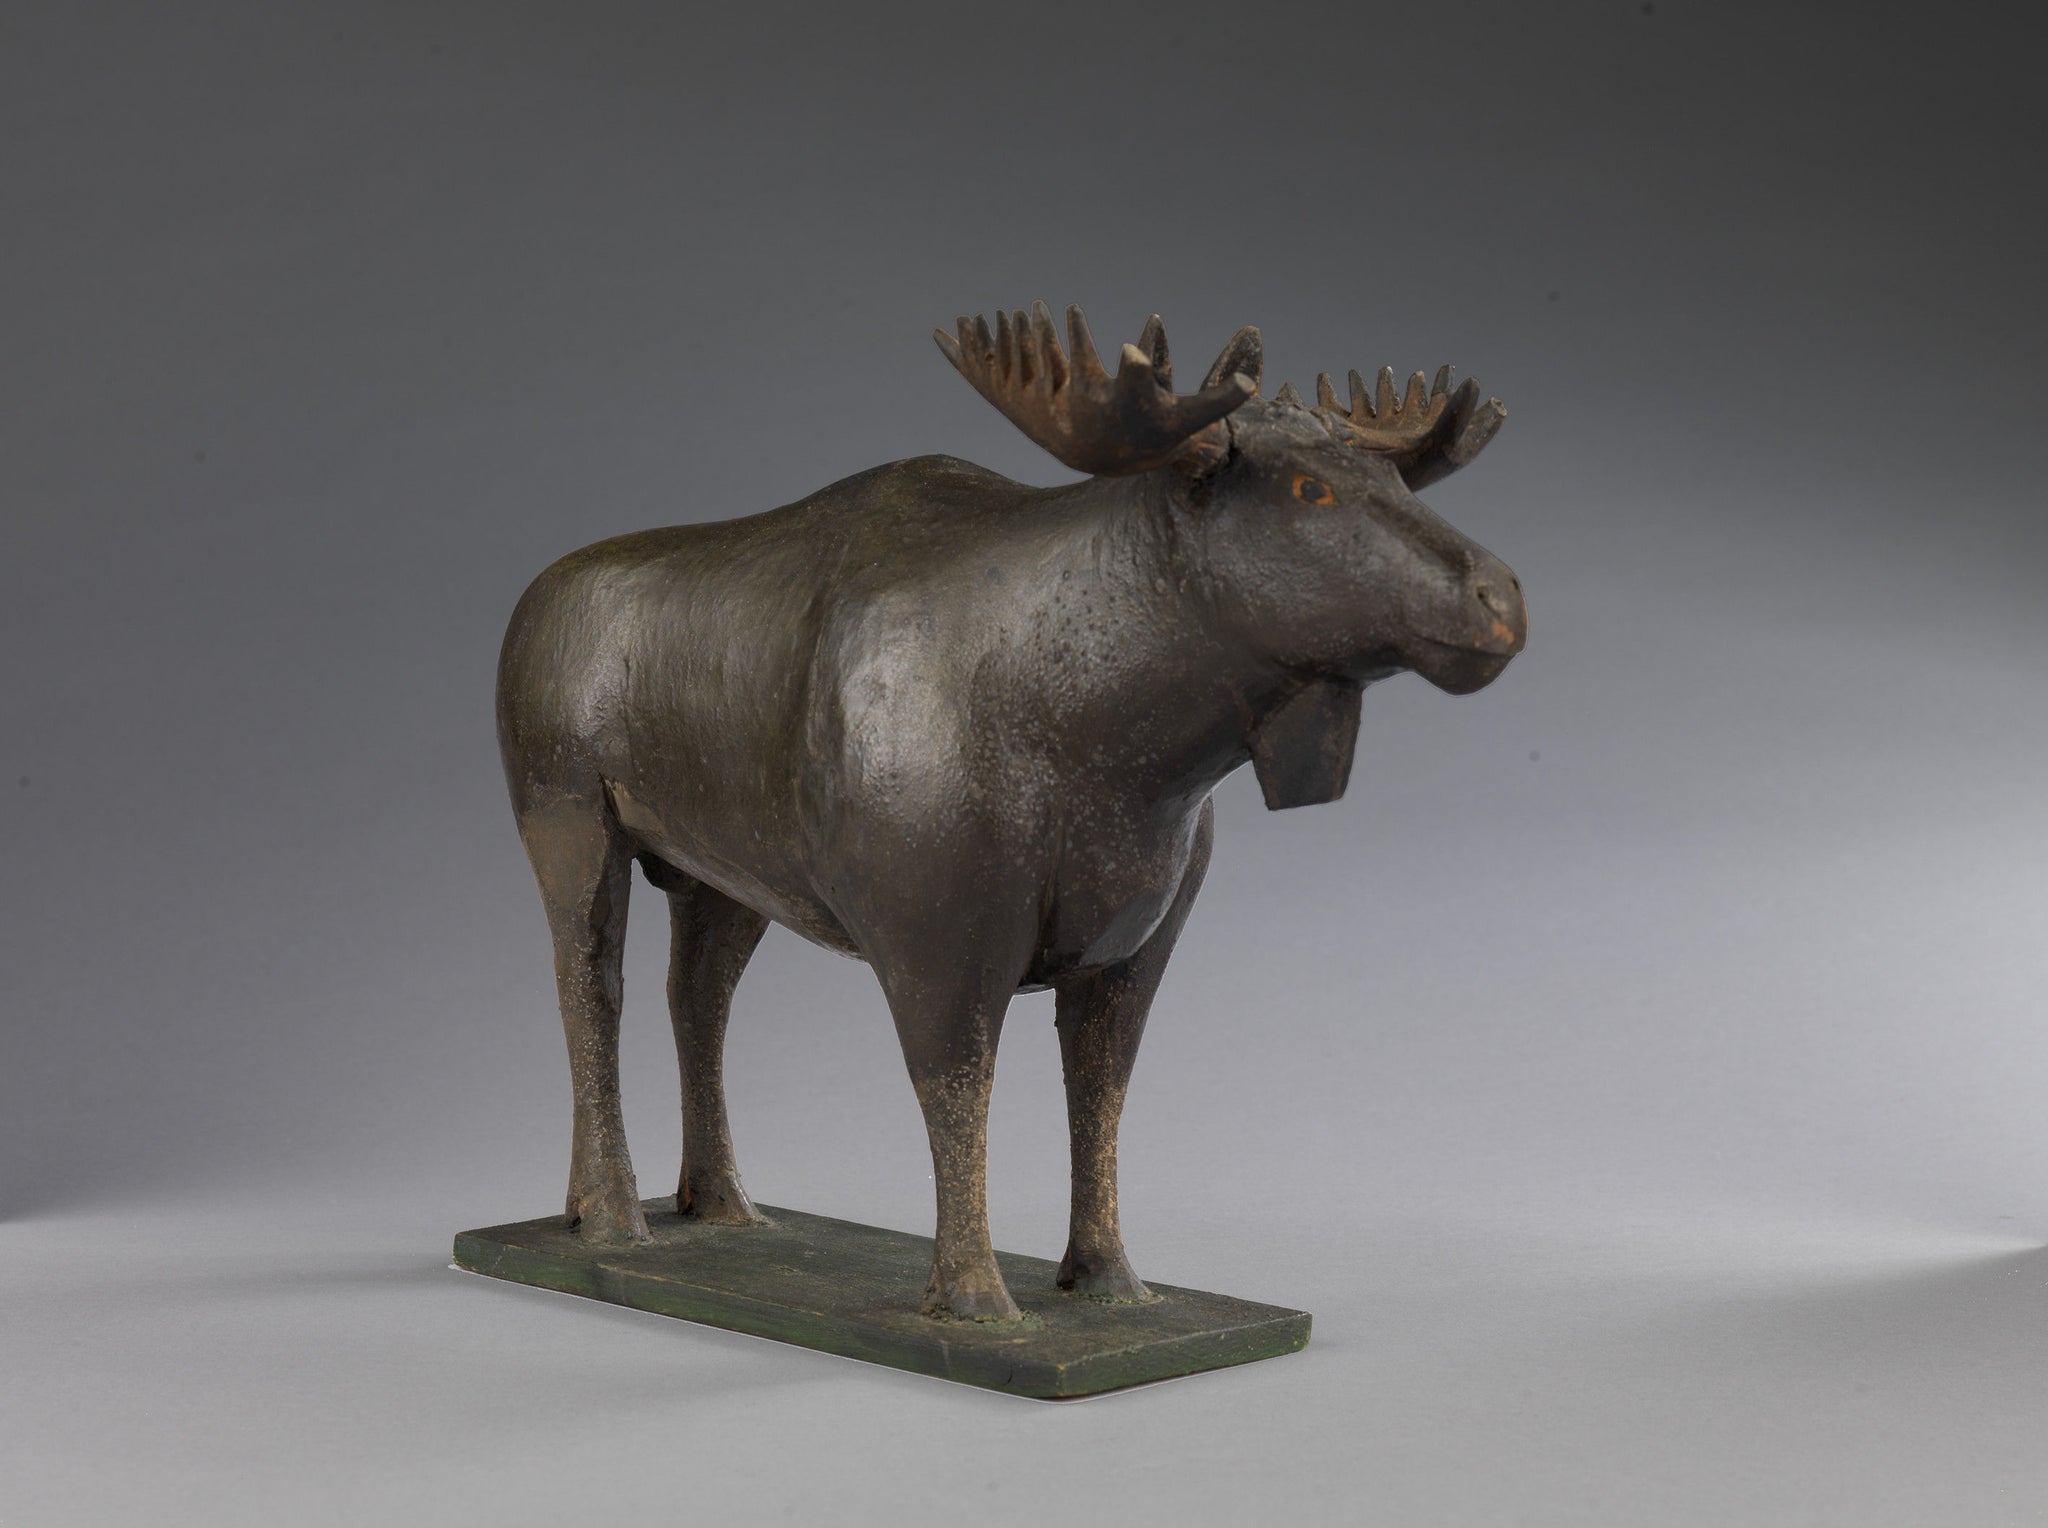 Engaging Folk Art Sculpture of a Moose